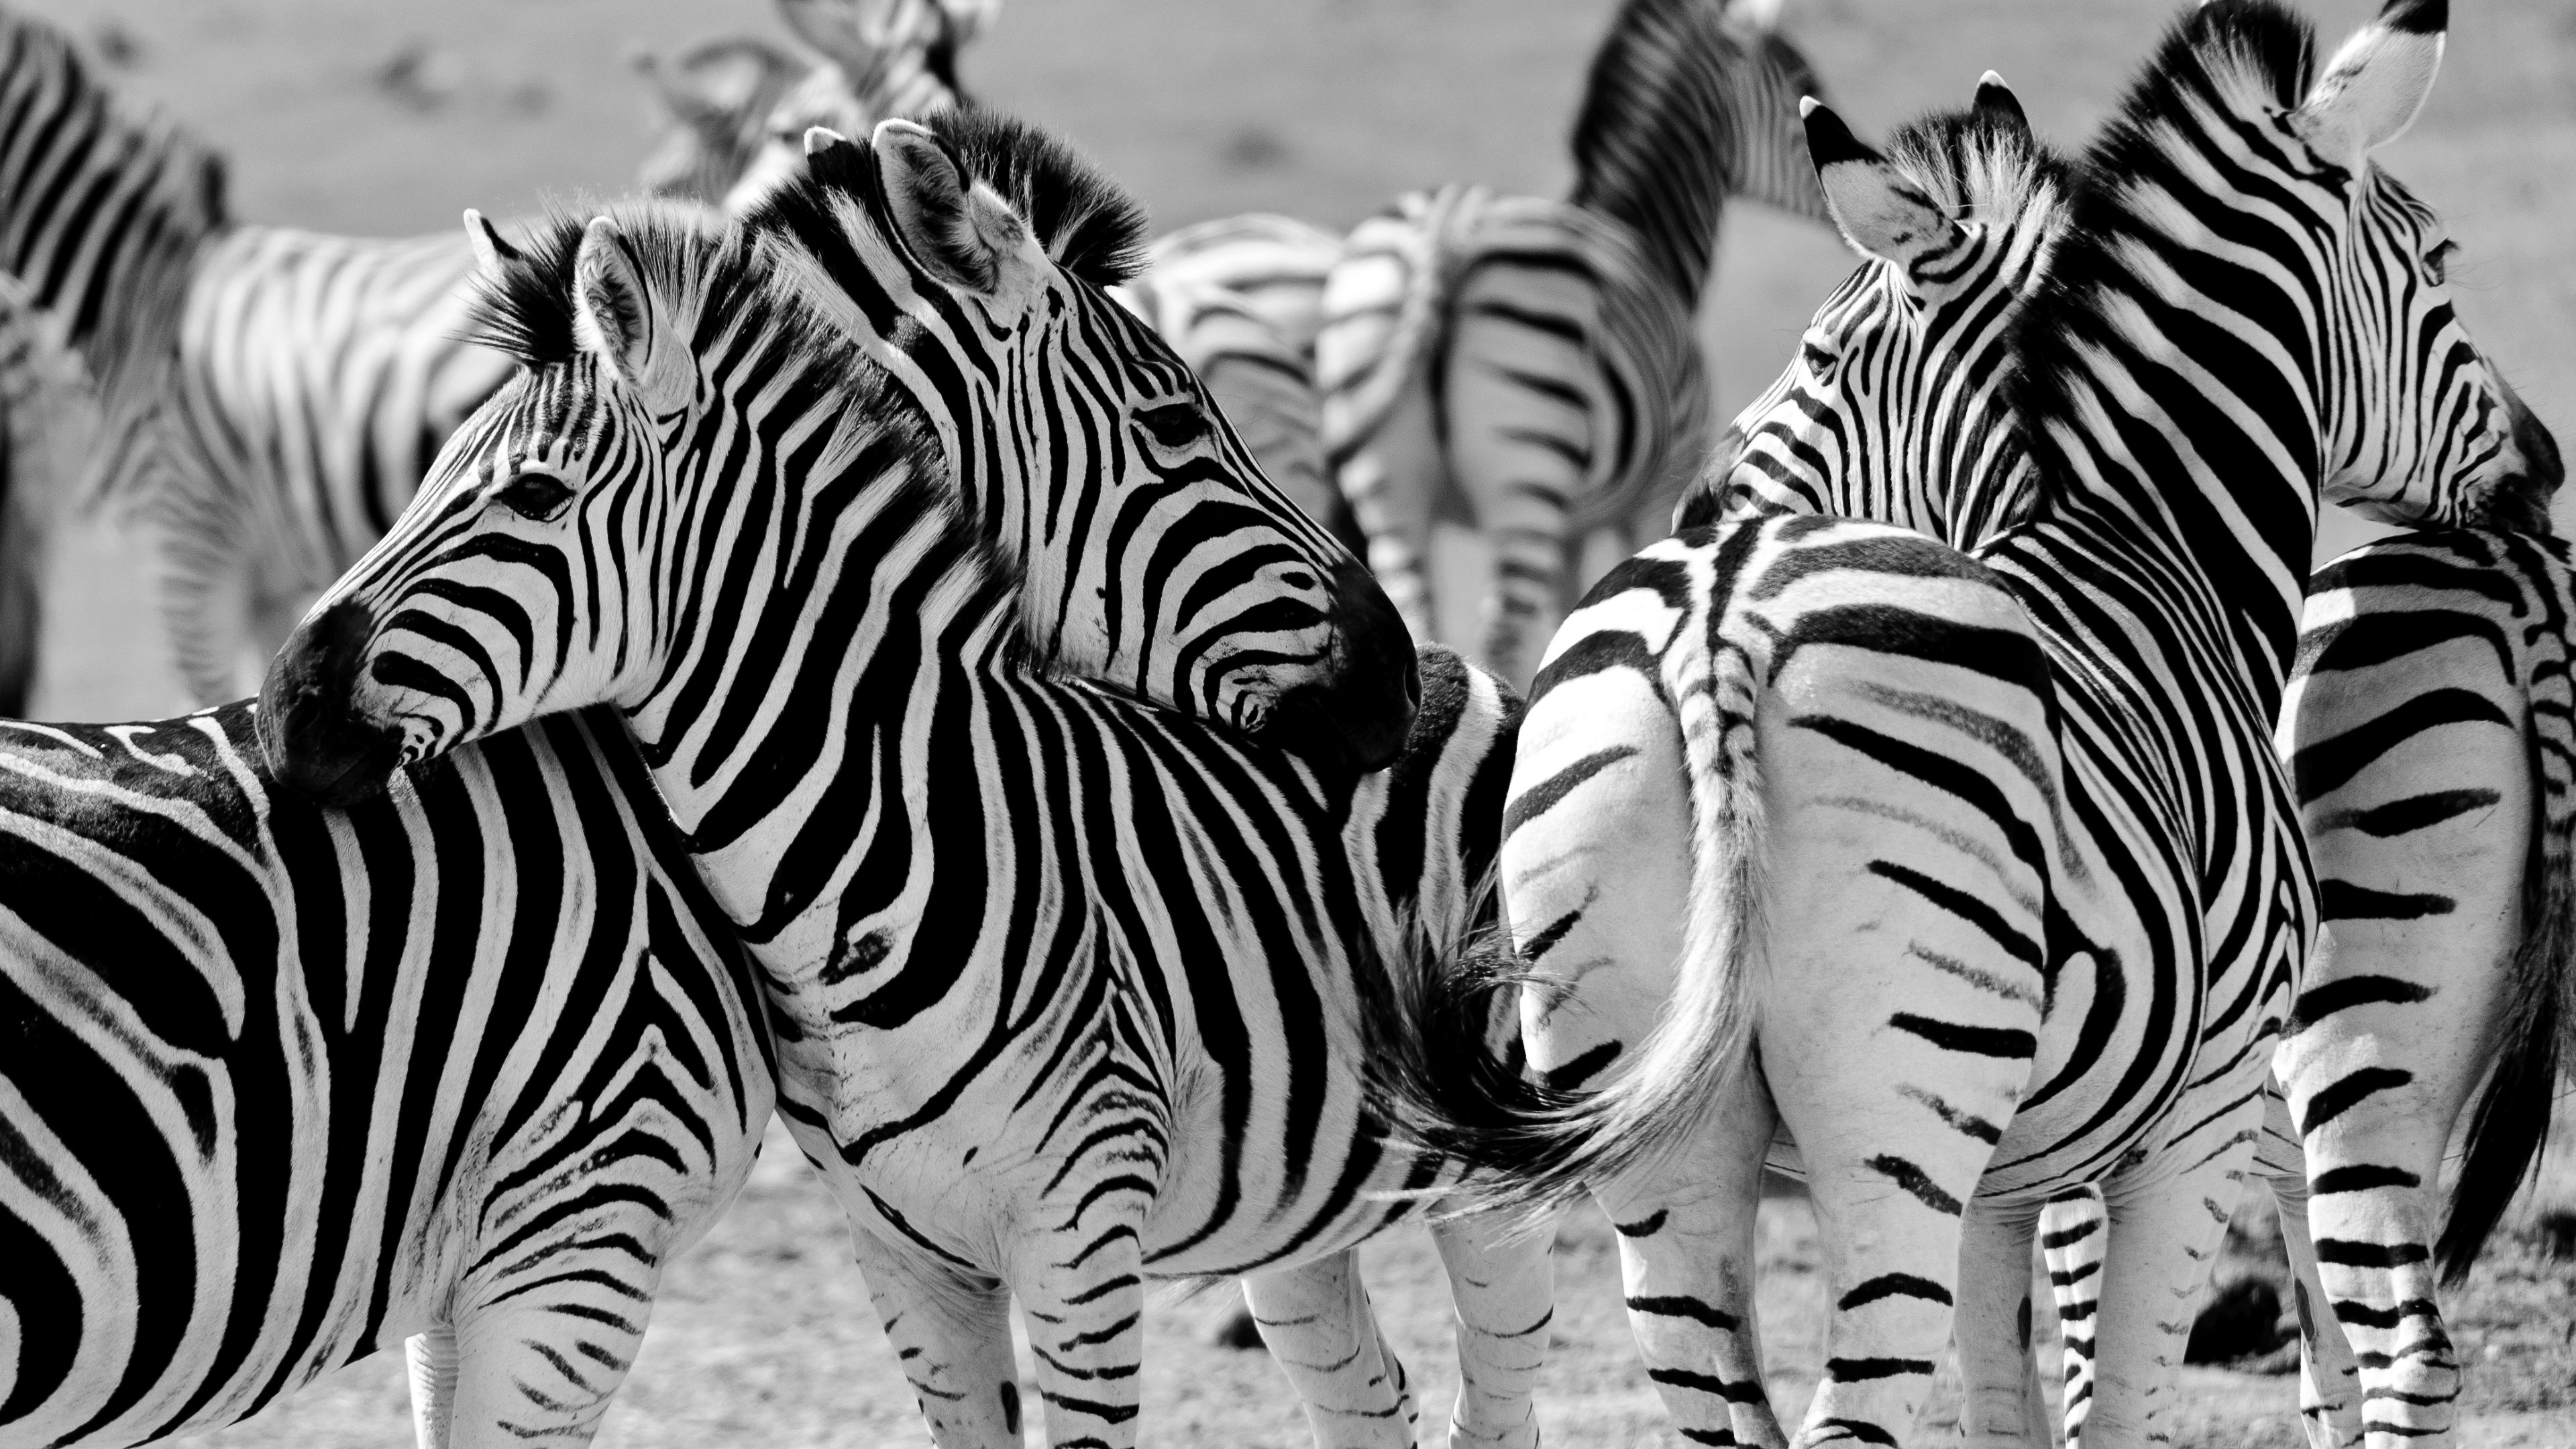 HD zebra wallpapers, Ultra HD wildlife, Cool and vibrant, Striking animal photography, 3840x2160 4K Desktop